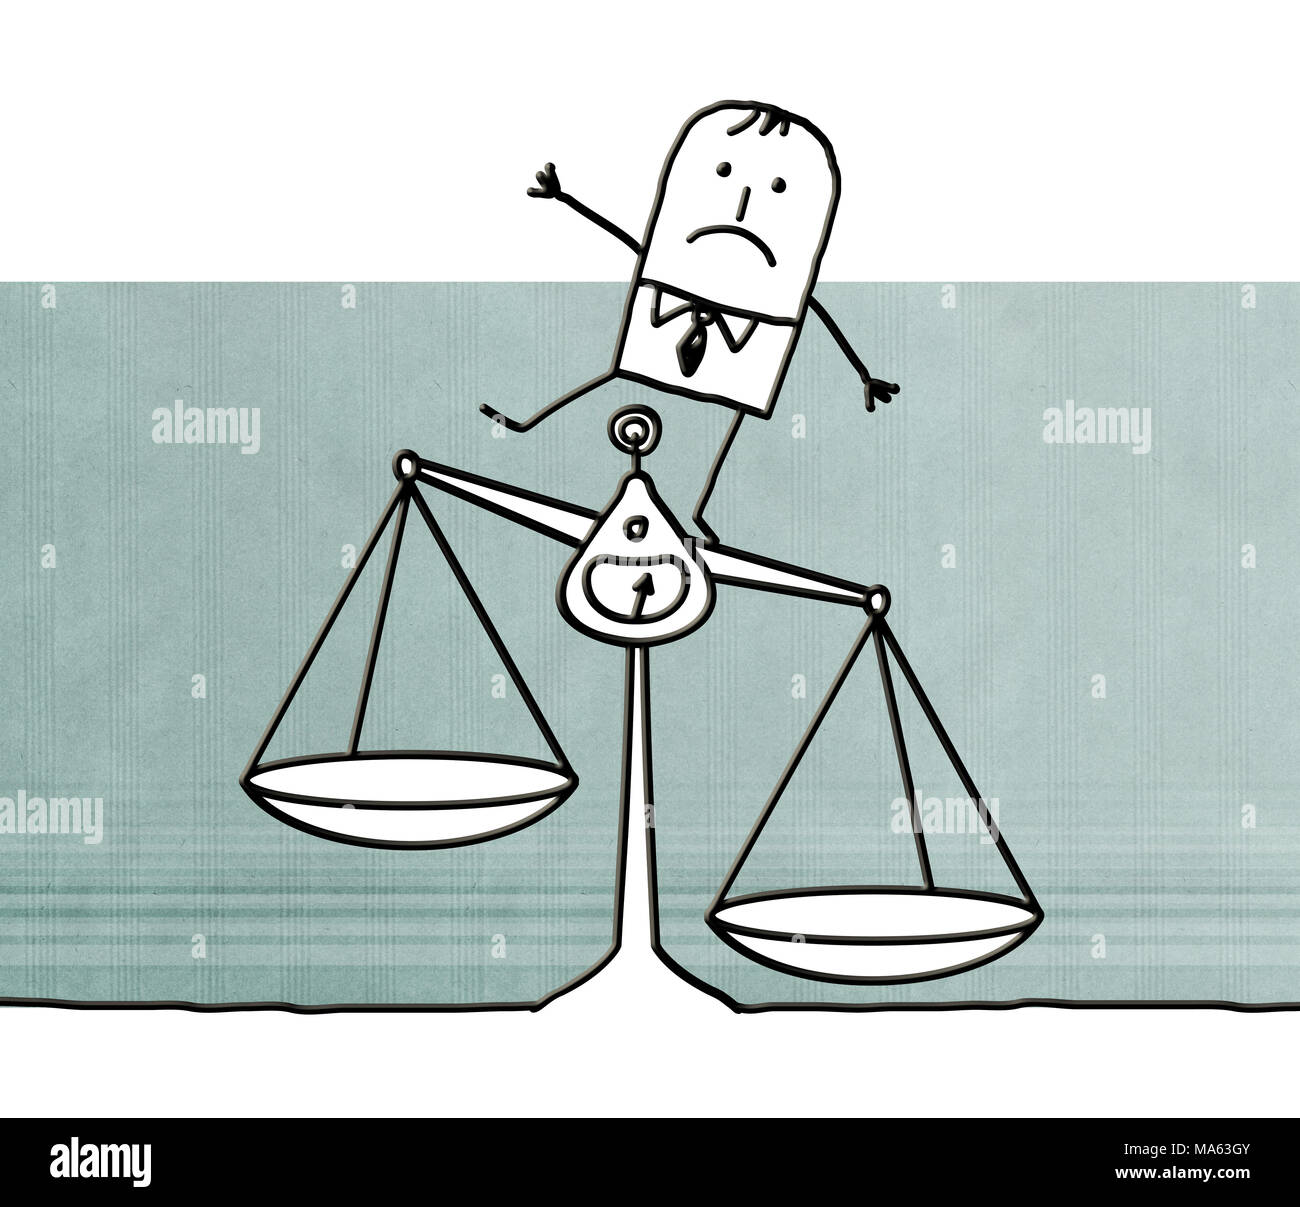 Cartoon uomo con equilibrio e ingiustizia Foto Stock